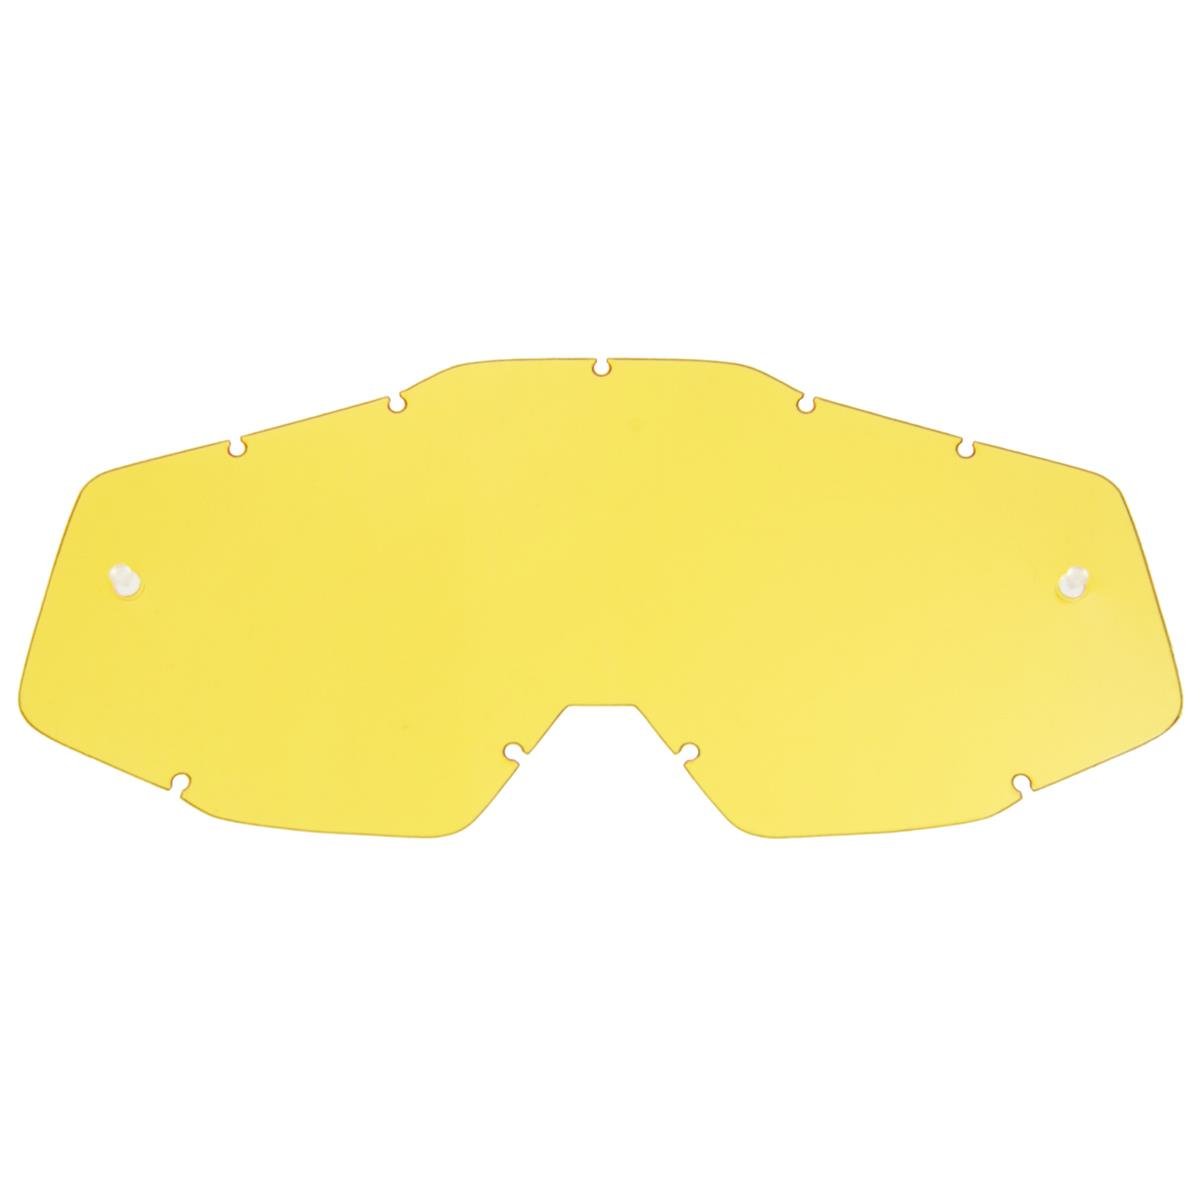 100% Replacement Lens Racecraft / Accuri / Strata Yellow - Antifog